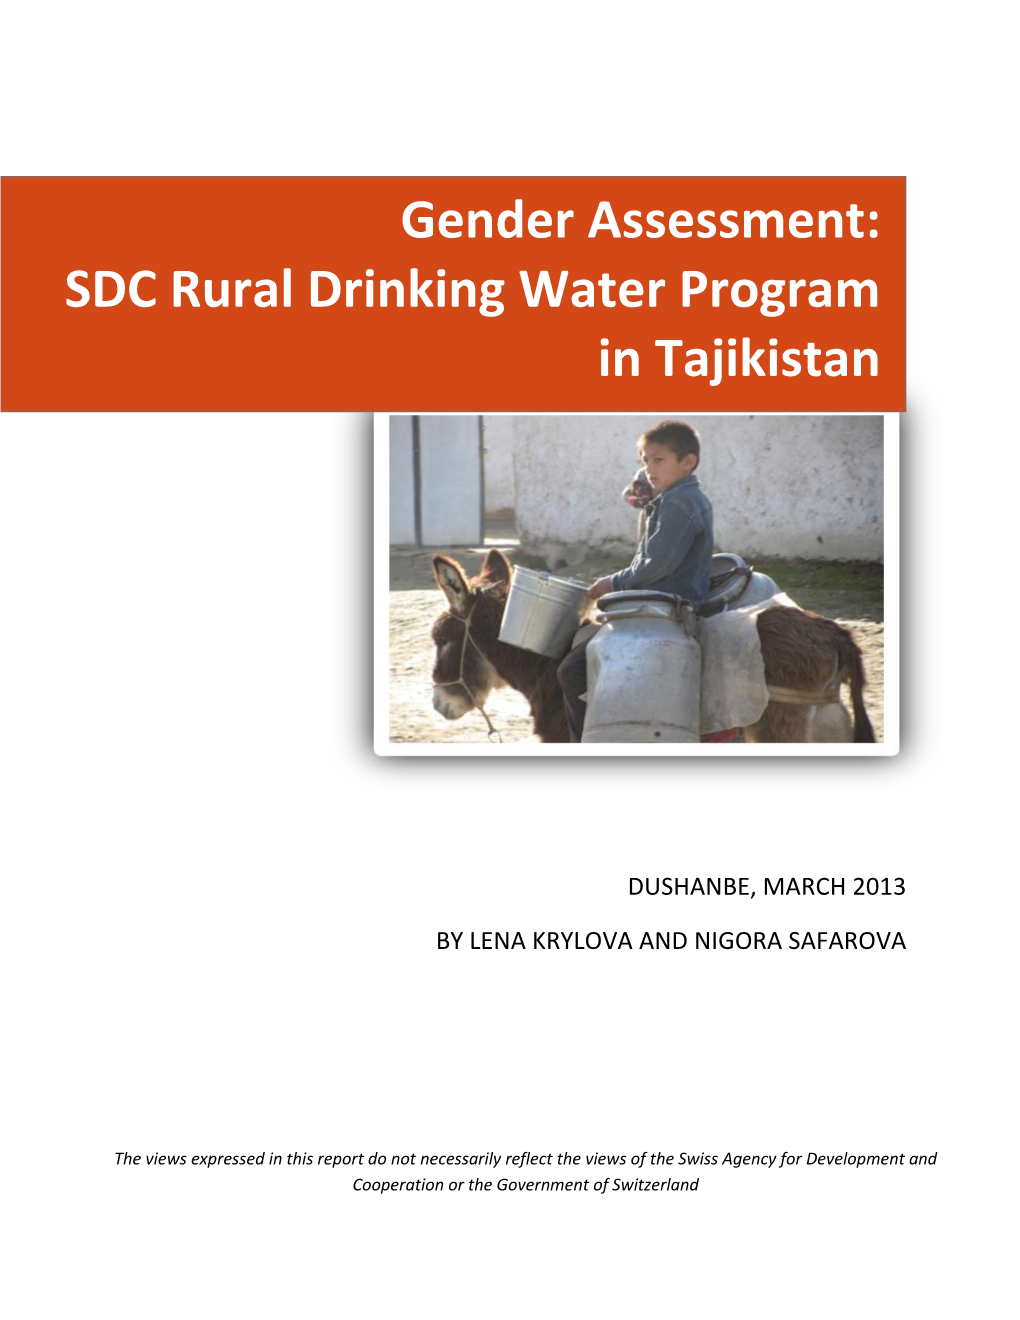 Gender Assessment: SDC Rural Drinking Water Program in Tajikistan